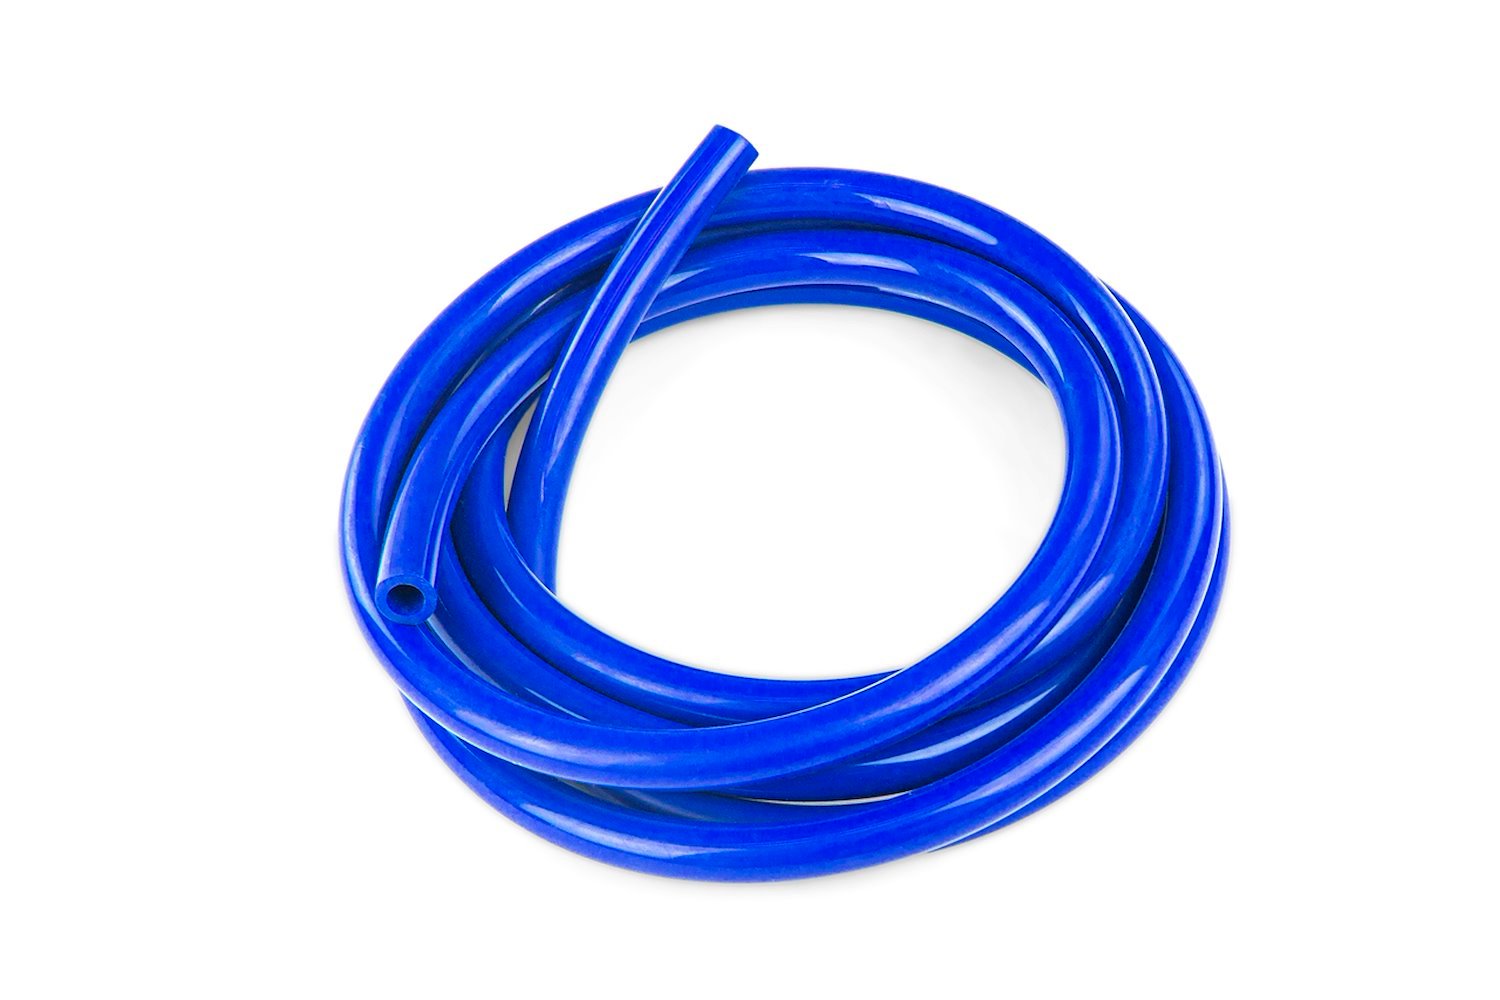 HTSVH8-BLUEx10 High-Temperature Silicone Vacuum Hose Tubing, 5/16 in. ID, 10 ft. Roll, Blue